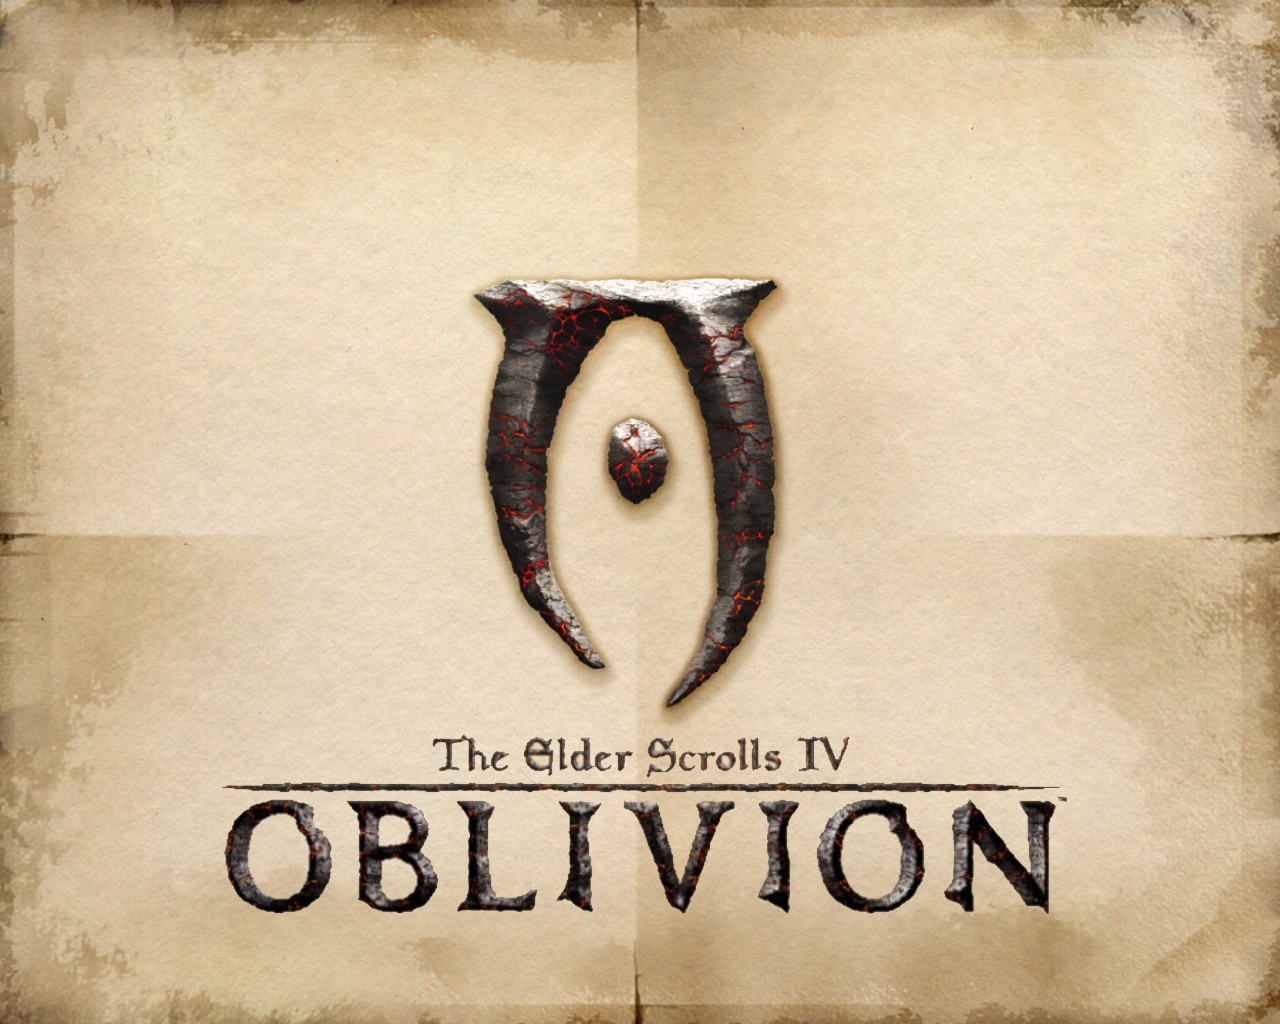 The Elder Scrolls IV: Oblivion Wallpaper. Just Good Vibe